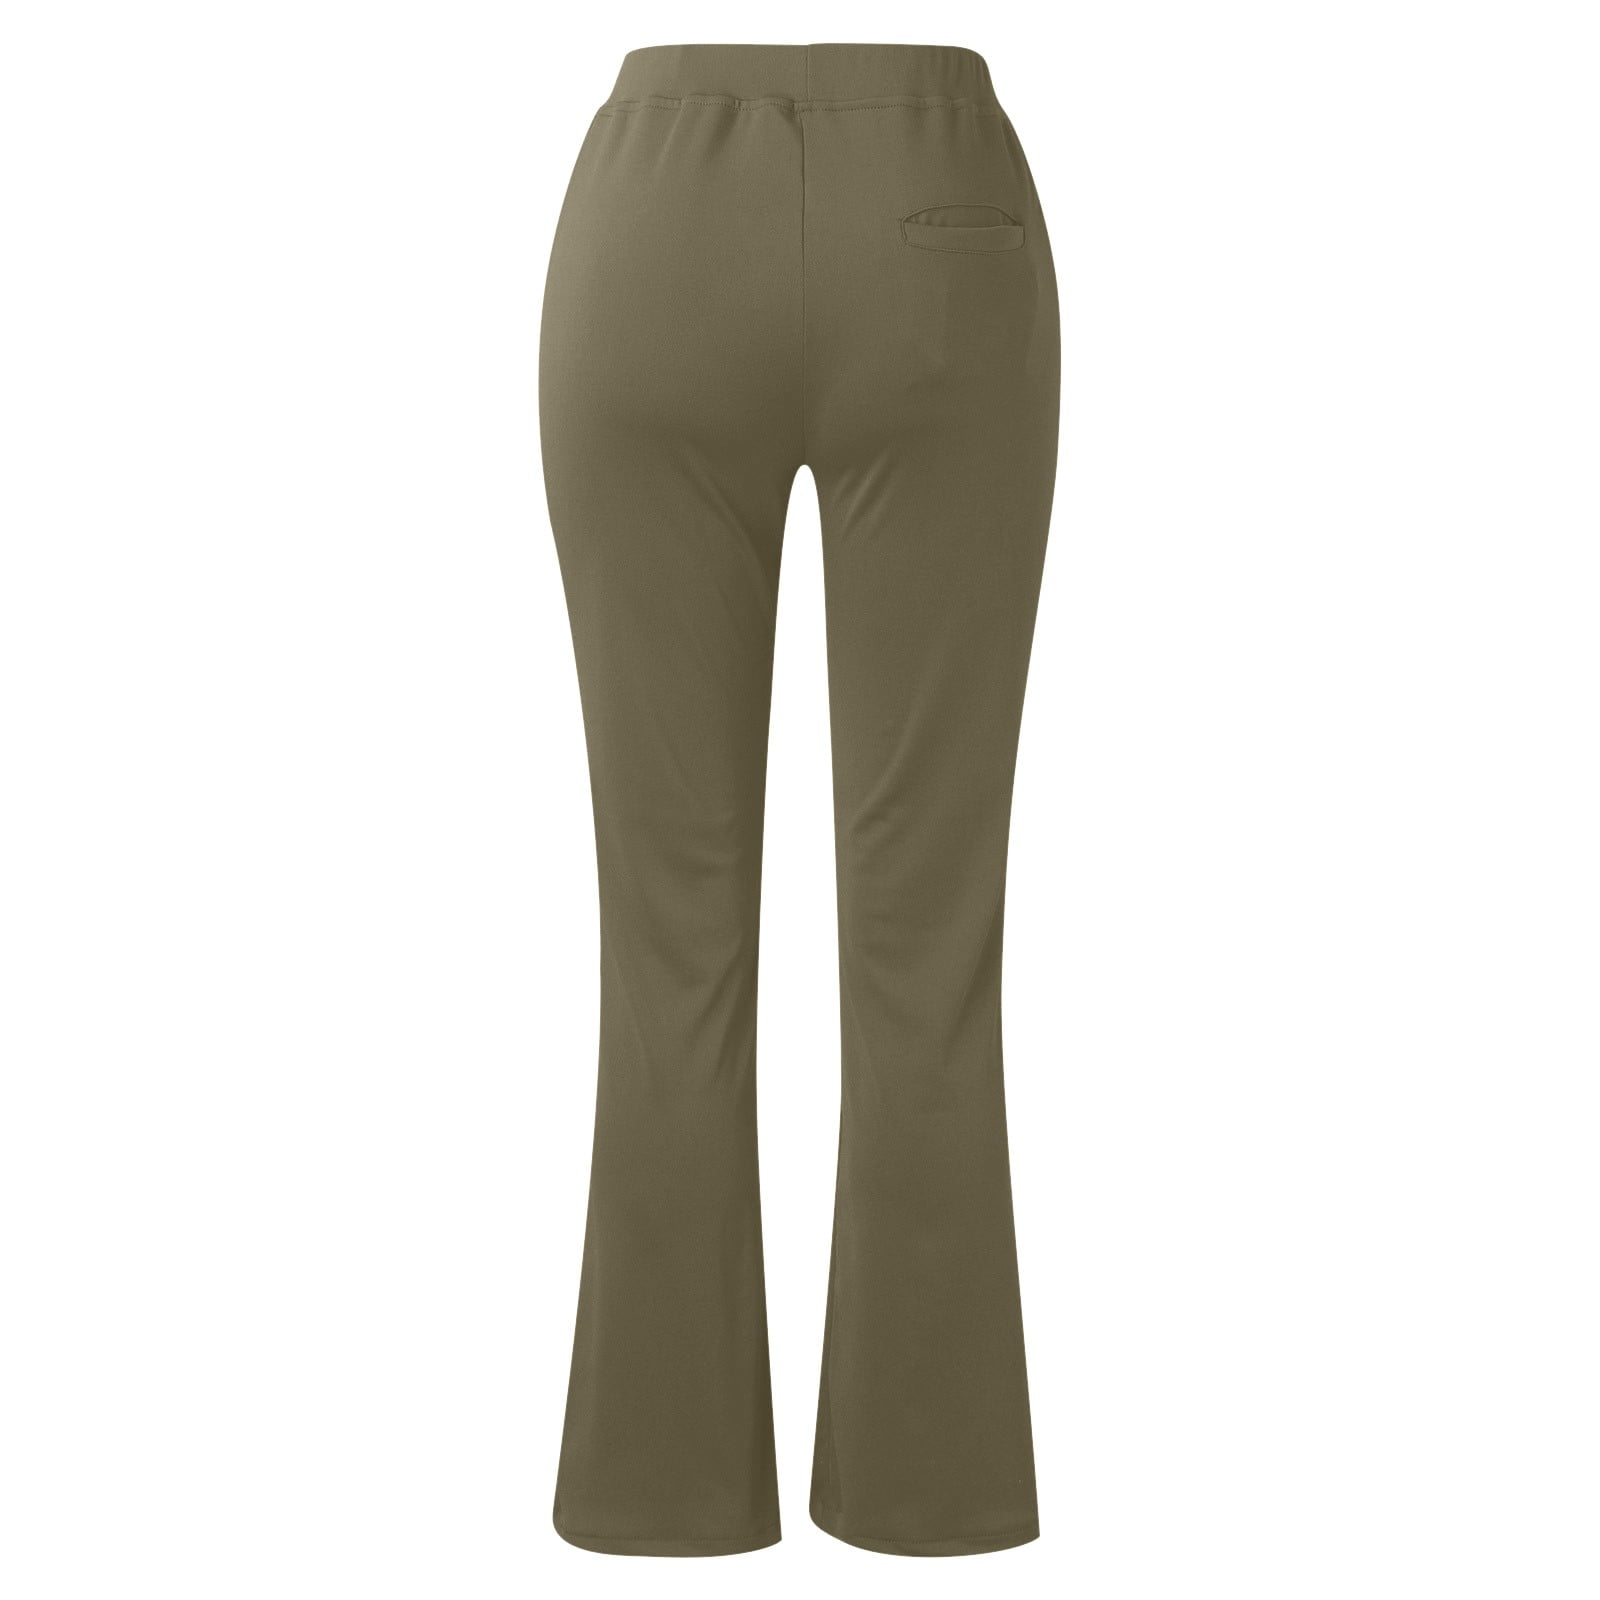 Hfyihgf Women's Yoga Dress Pants Stretchy Work Slacks Business Casual  Straight-Leg Bootcut Pull on Trousers(Gray,S) 